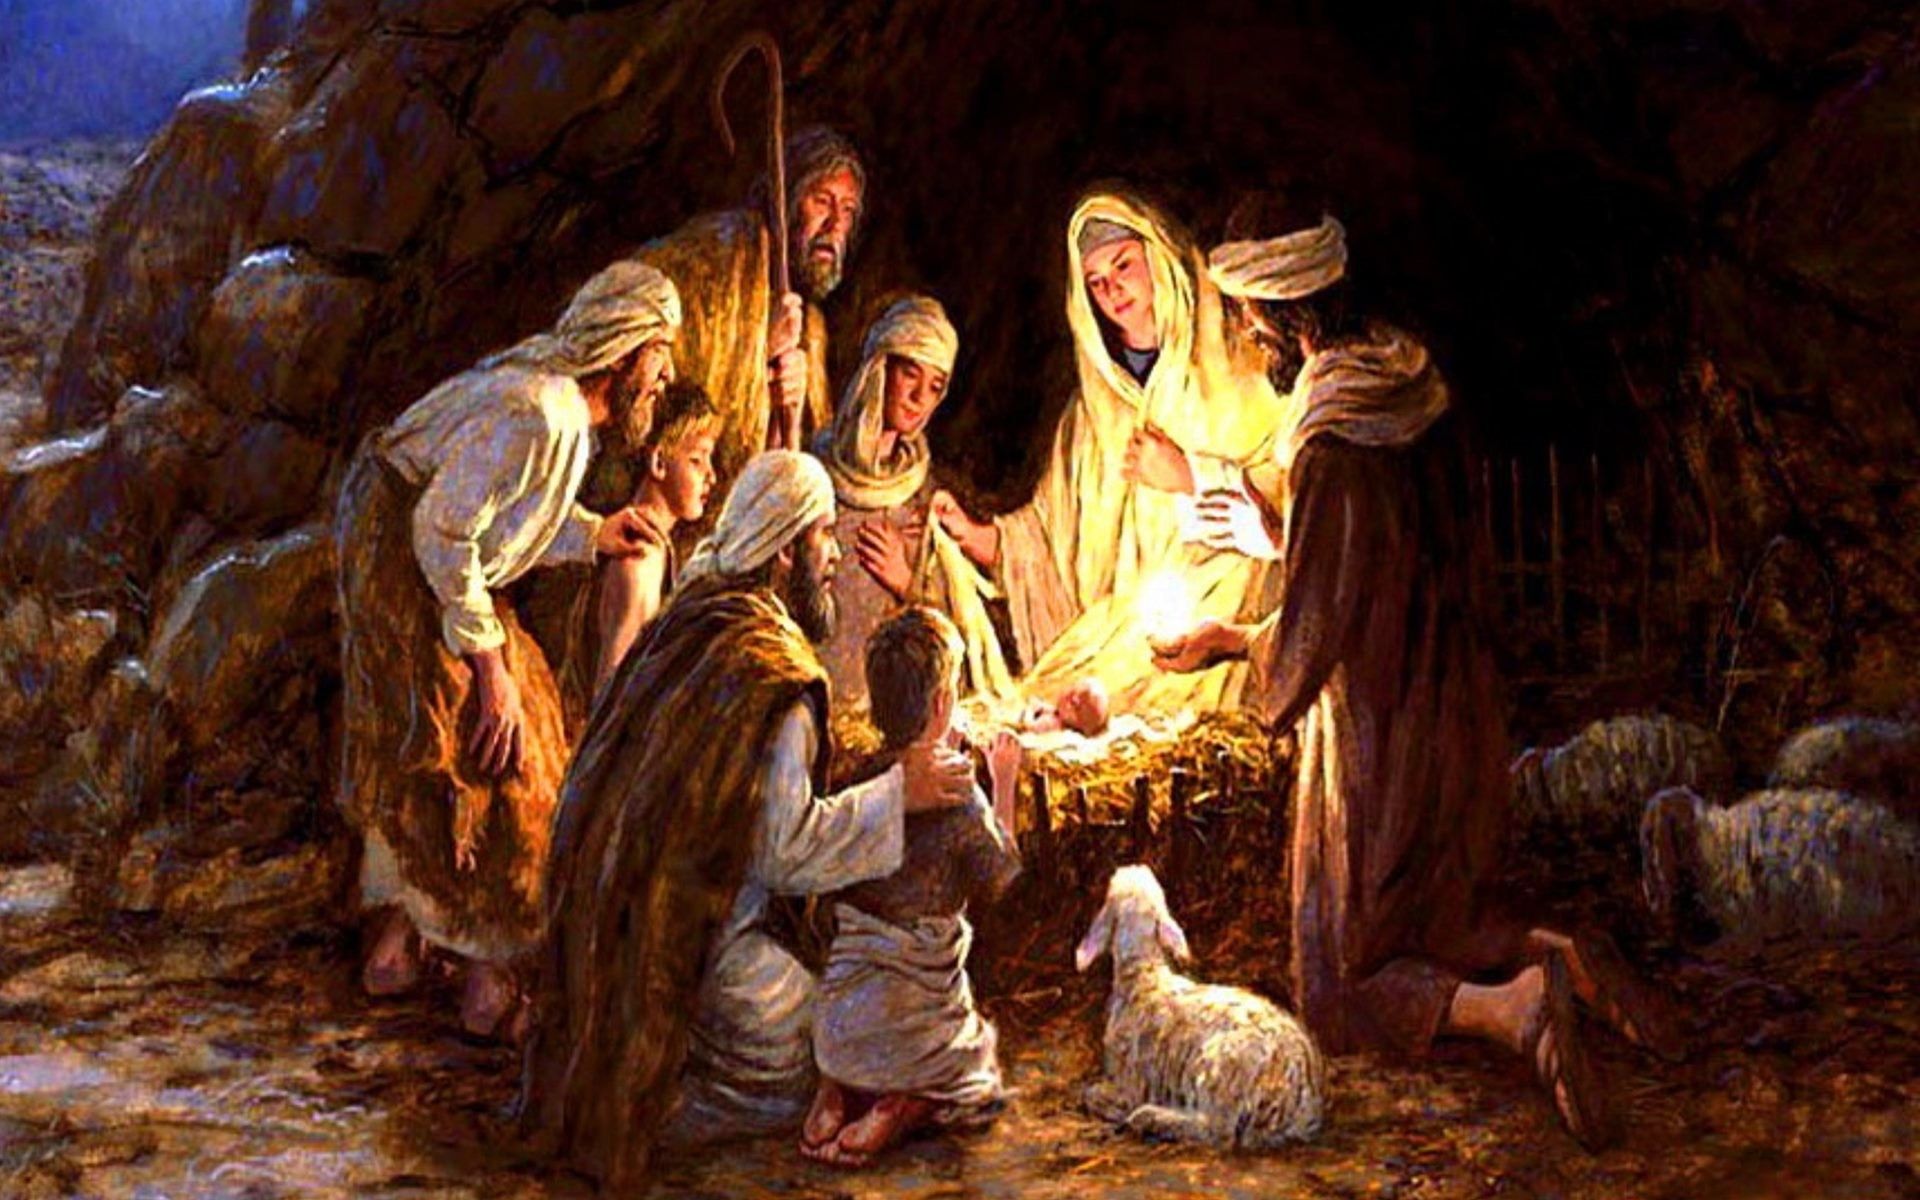 Birth of Jesus - Christmas Wallpaper (43703151) - Fanpop